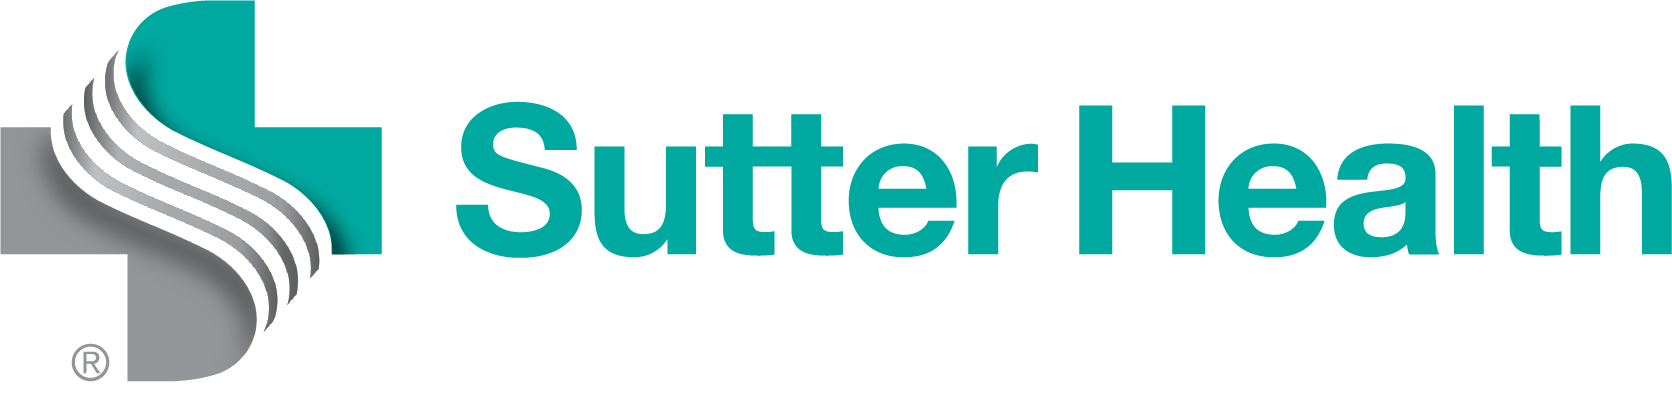 Sutter Health Logo png